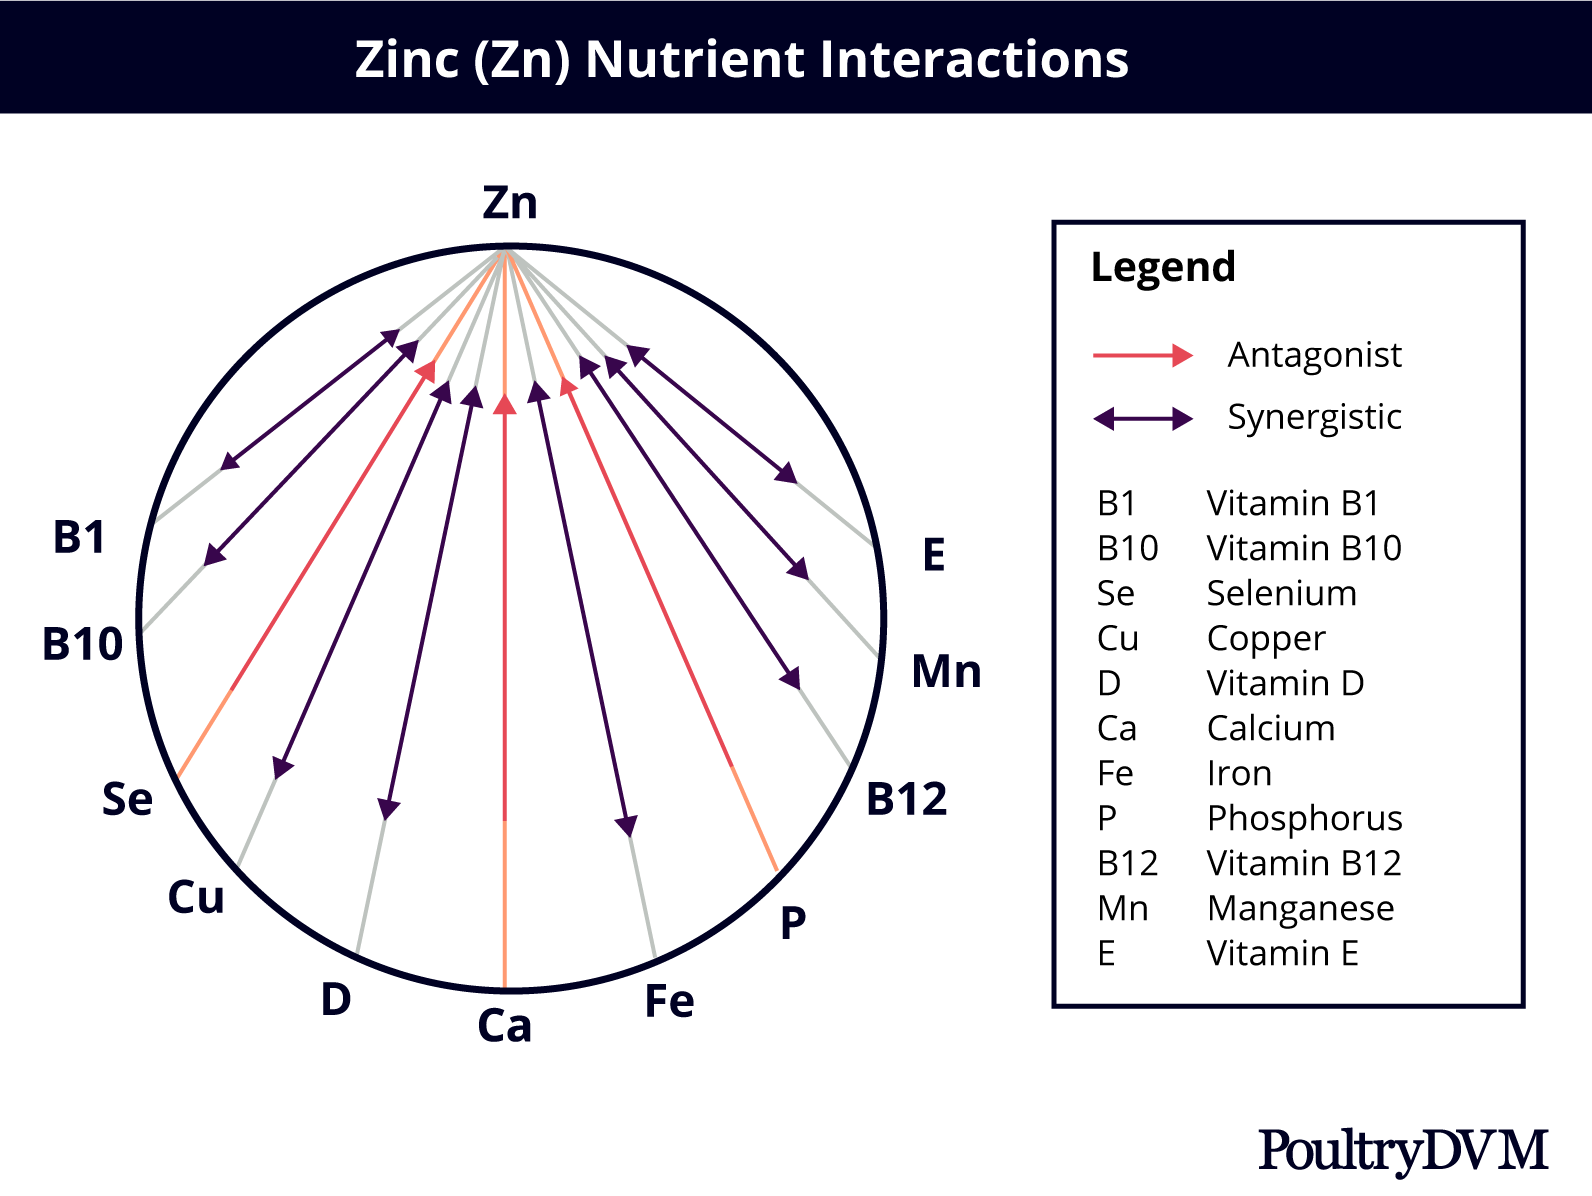 Zinc nutrient interactions